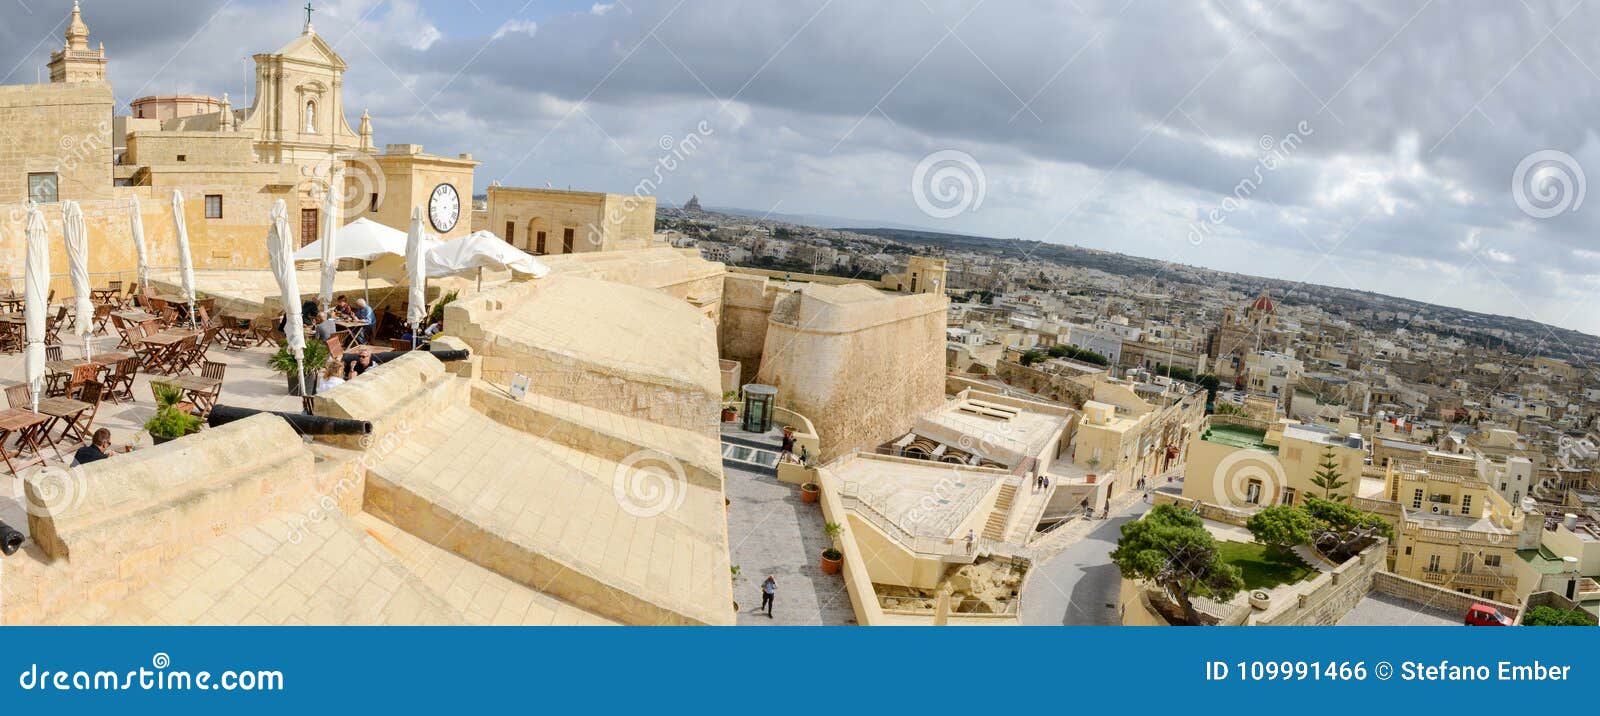 View Of Victoria On Gozo Island, Malta Editorial Photo - Image of